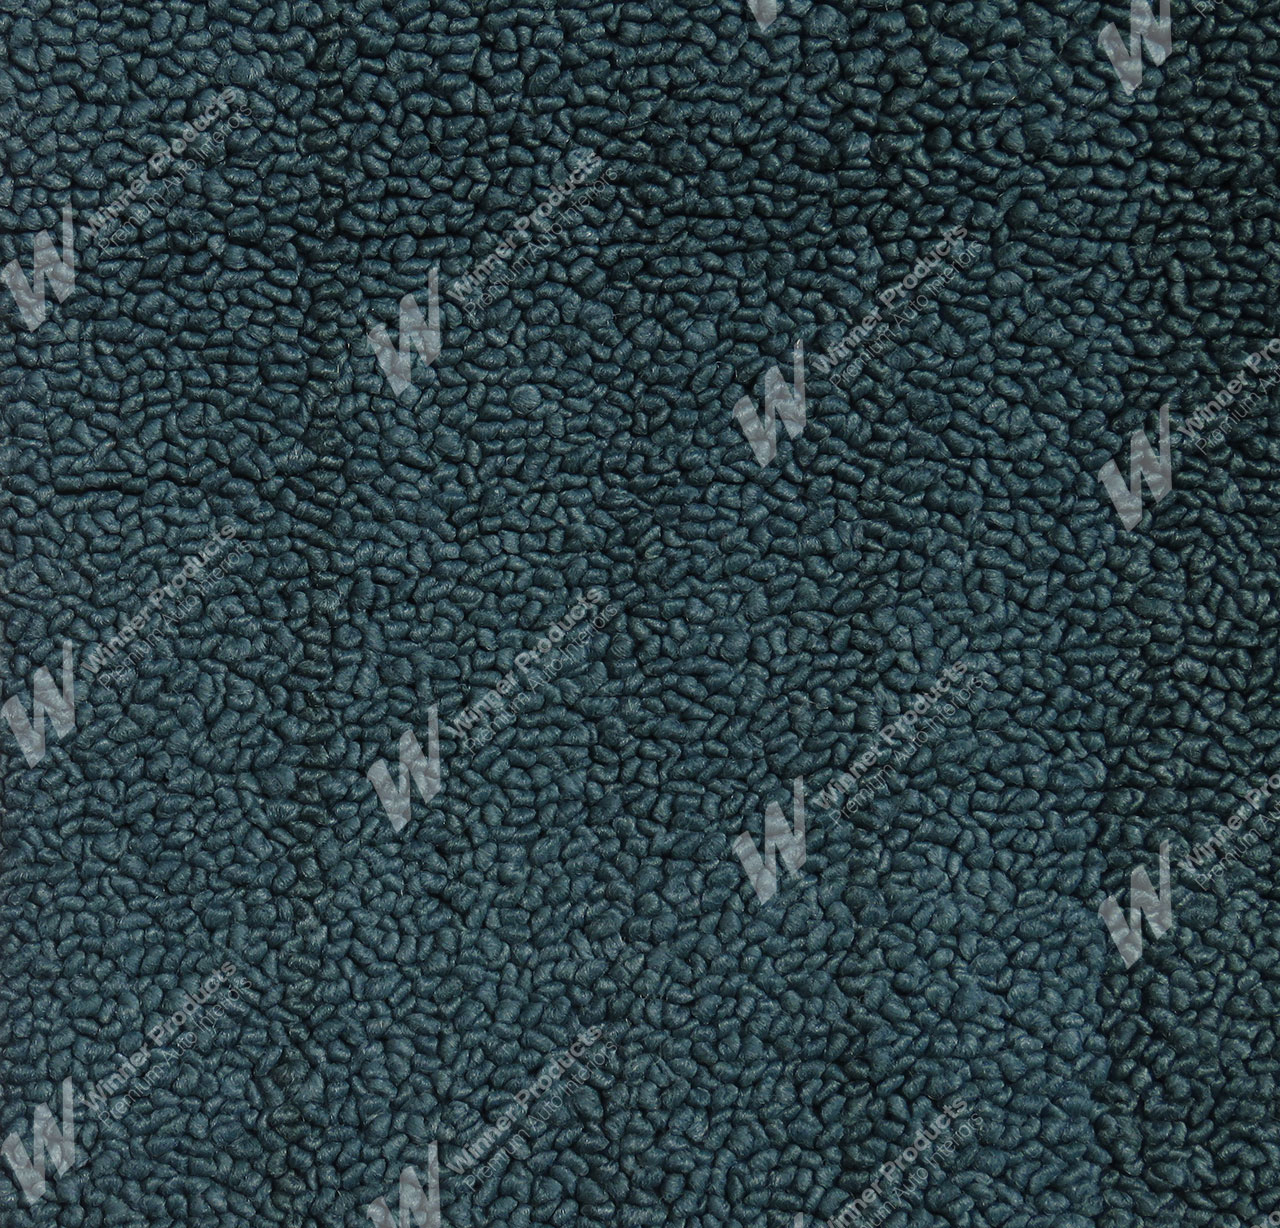 Holden Premier HT Premier Wagon 13R Turquoise Mist Carpet (Image 1 of 1)